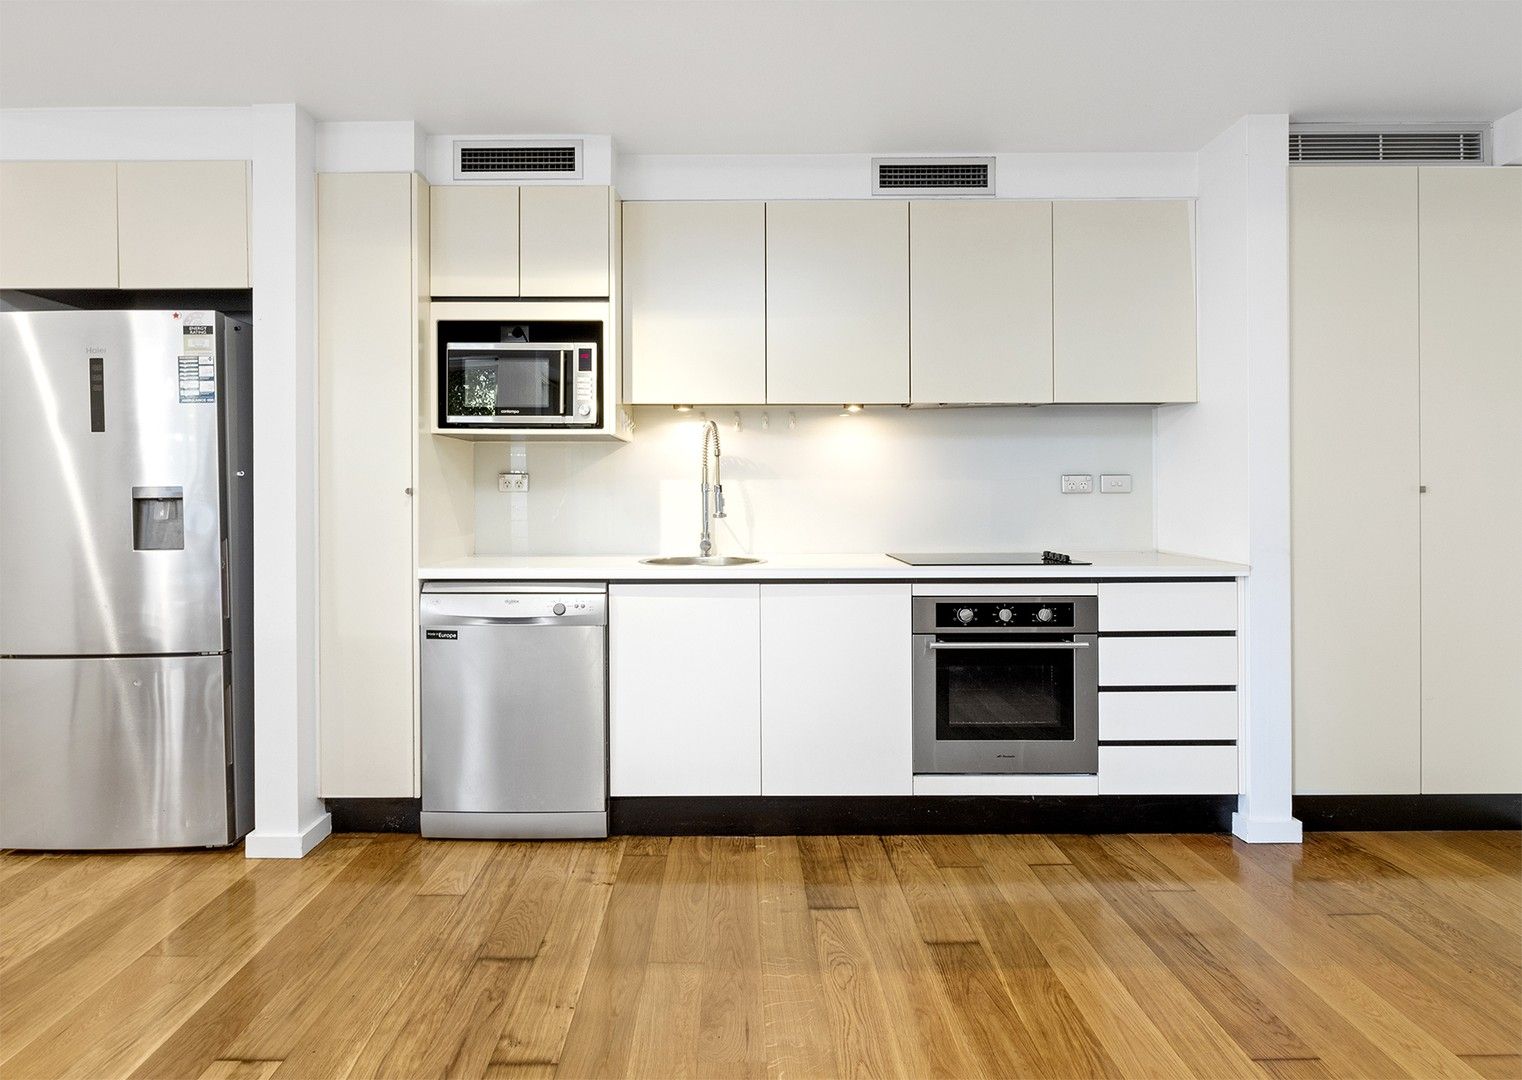 2 bedrooms Apartment / Unit / Flat in 1/31 Gerard Street ALEXANDRIA NSW, 2015